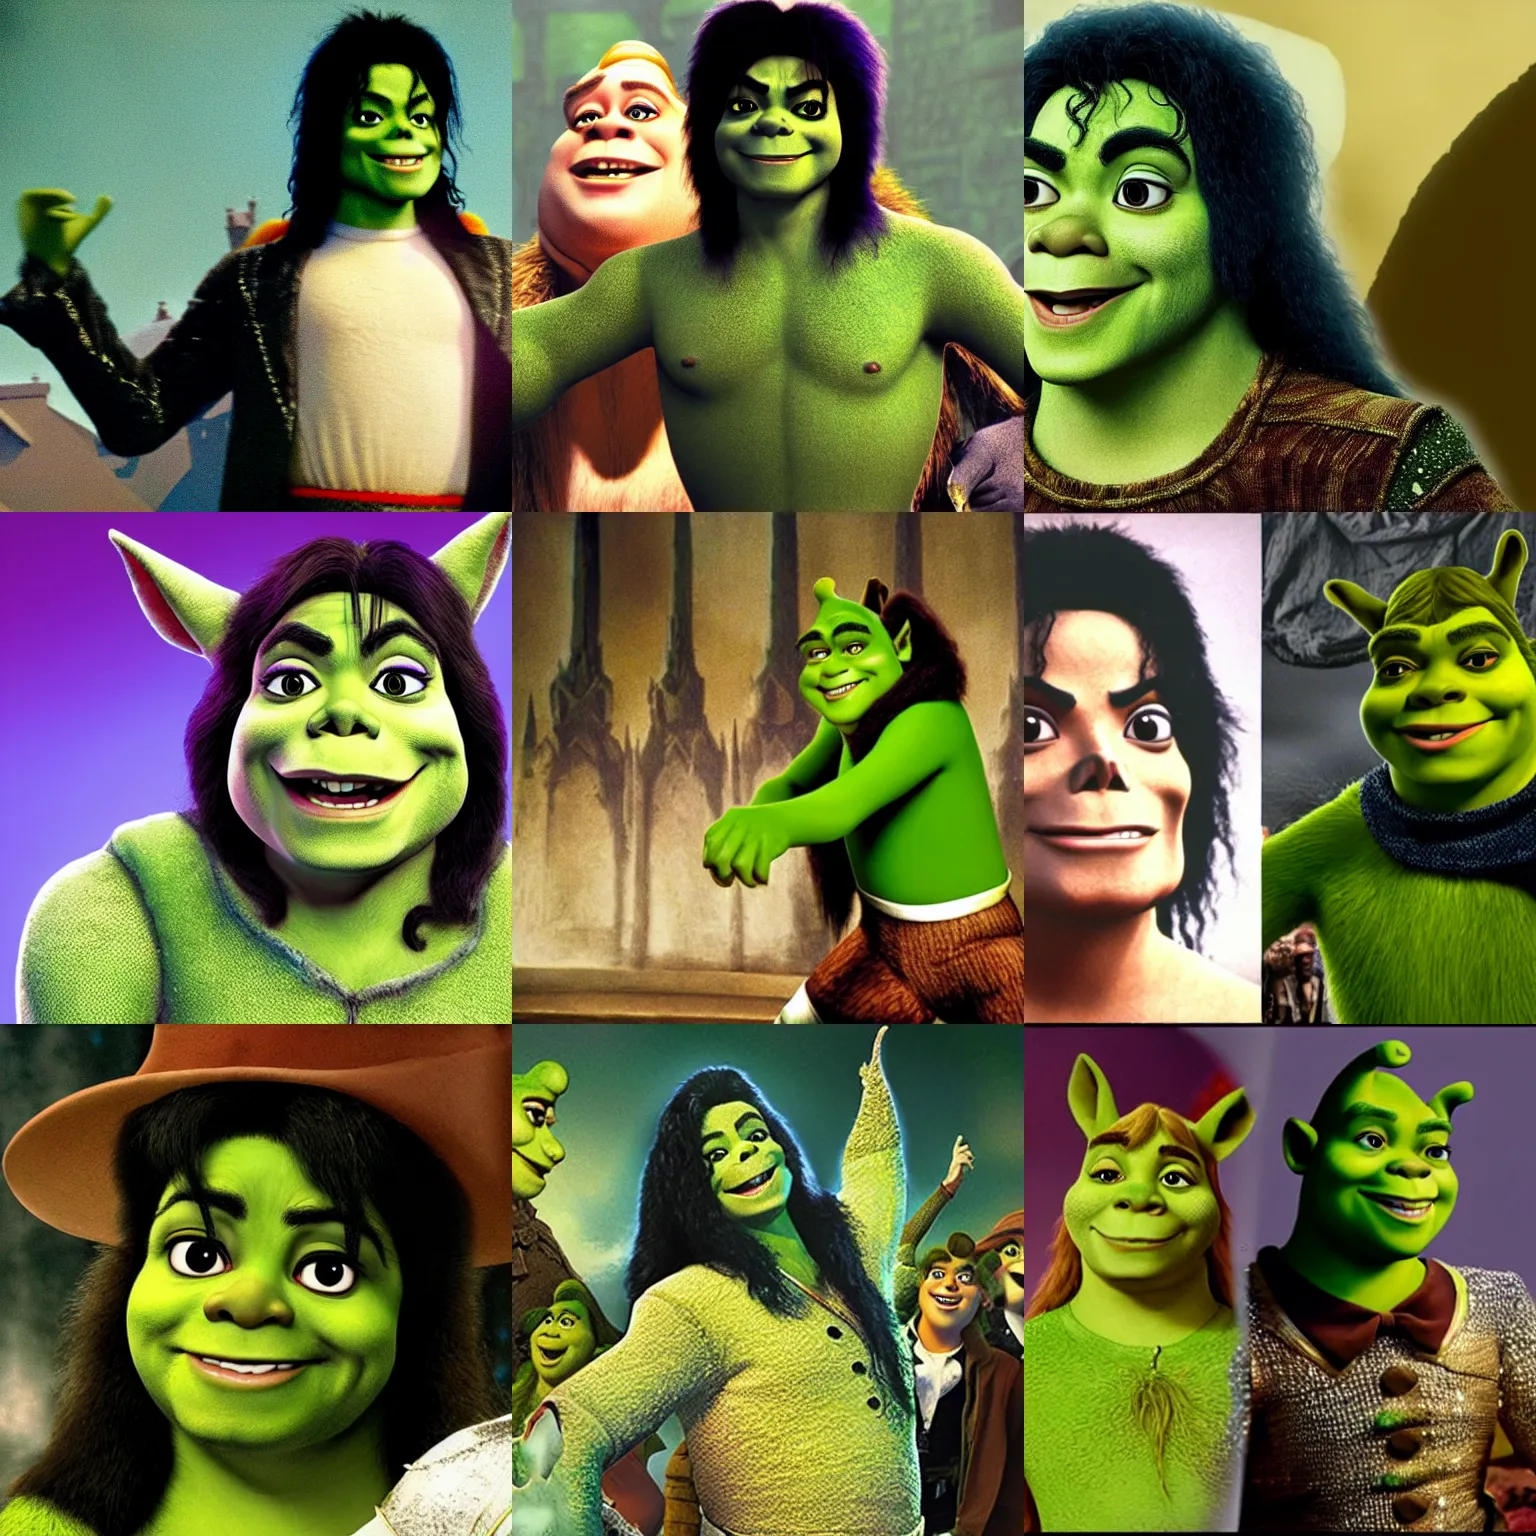 Prompt: Michael Jackson in Shrek film